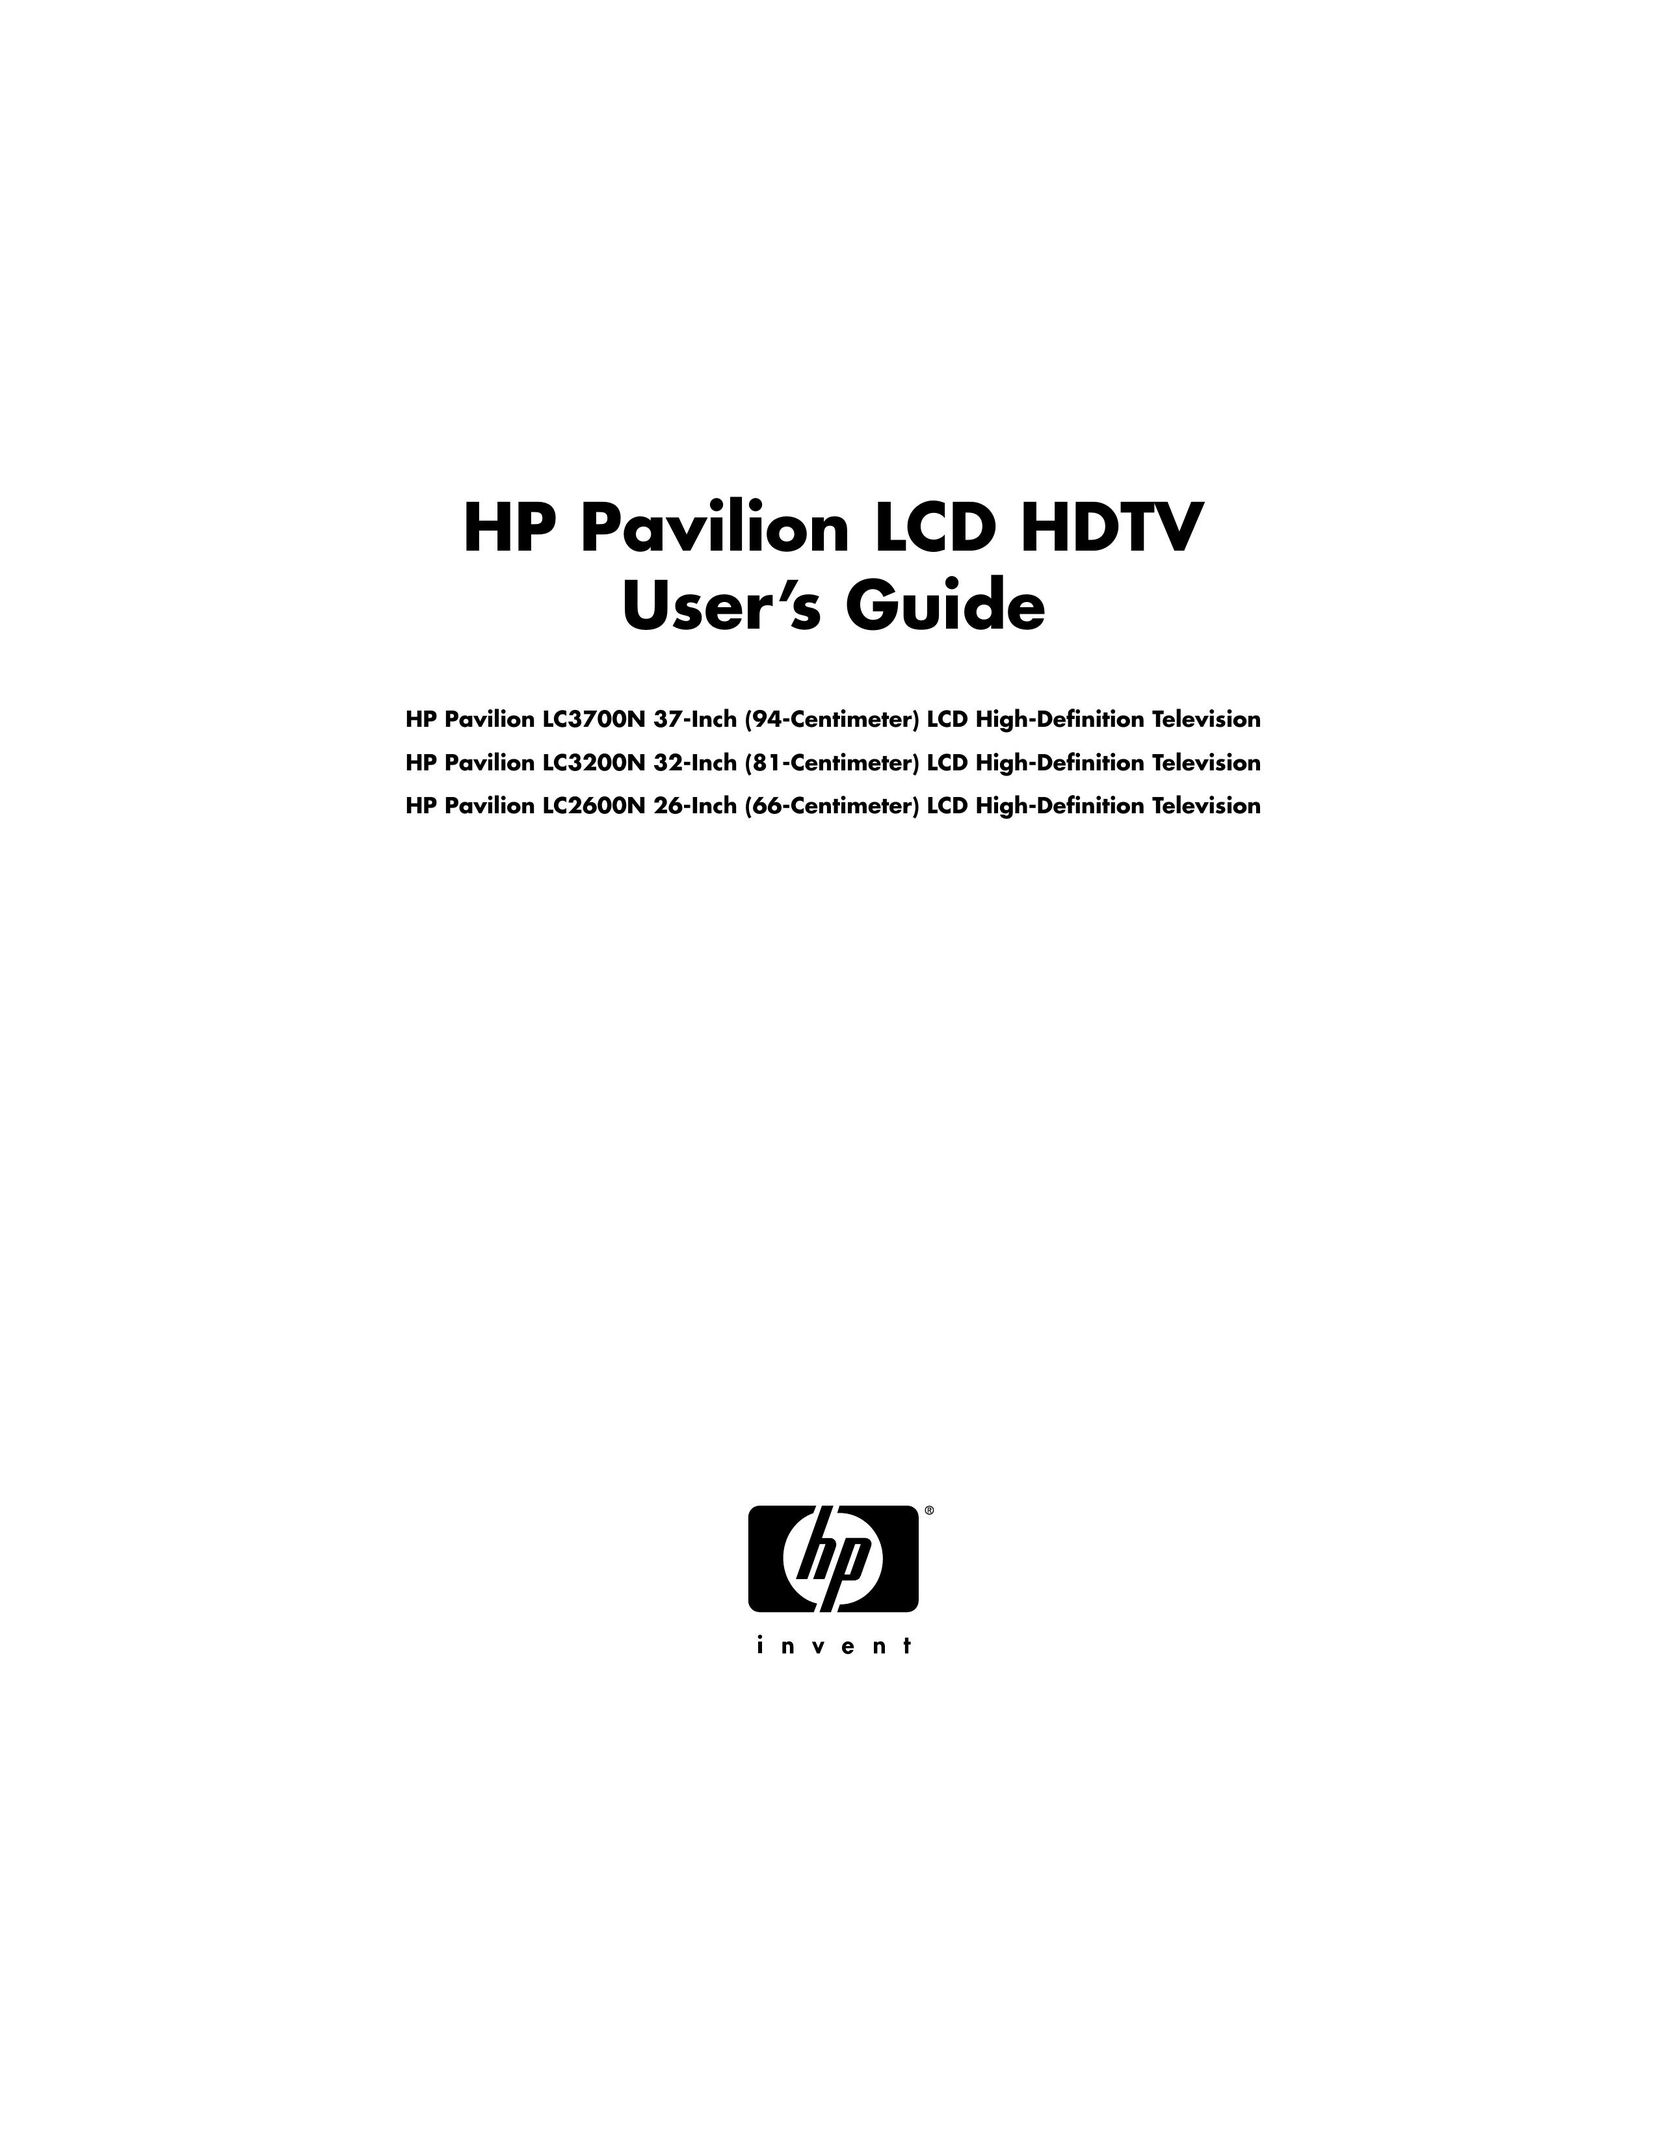 HP (Hewlett-Packard) LC3700N Flat Panel Television User Manual